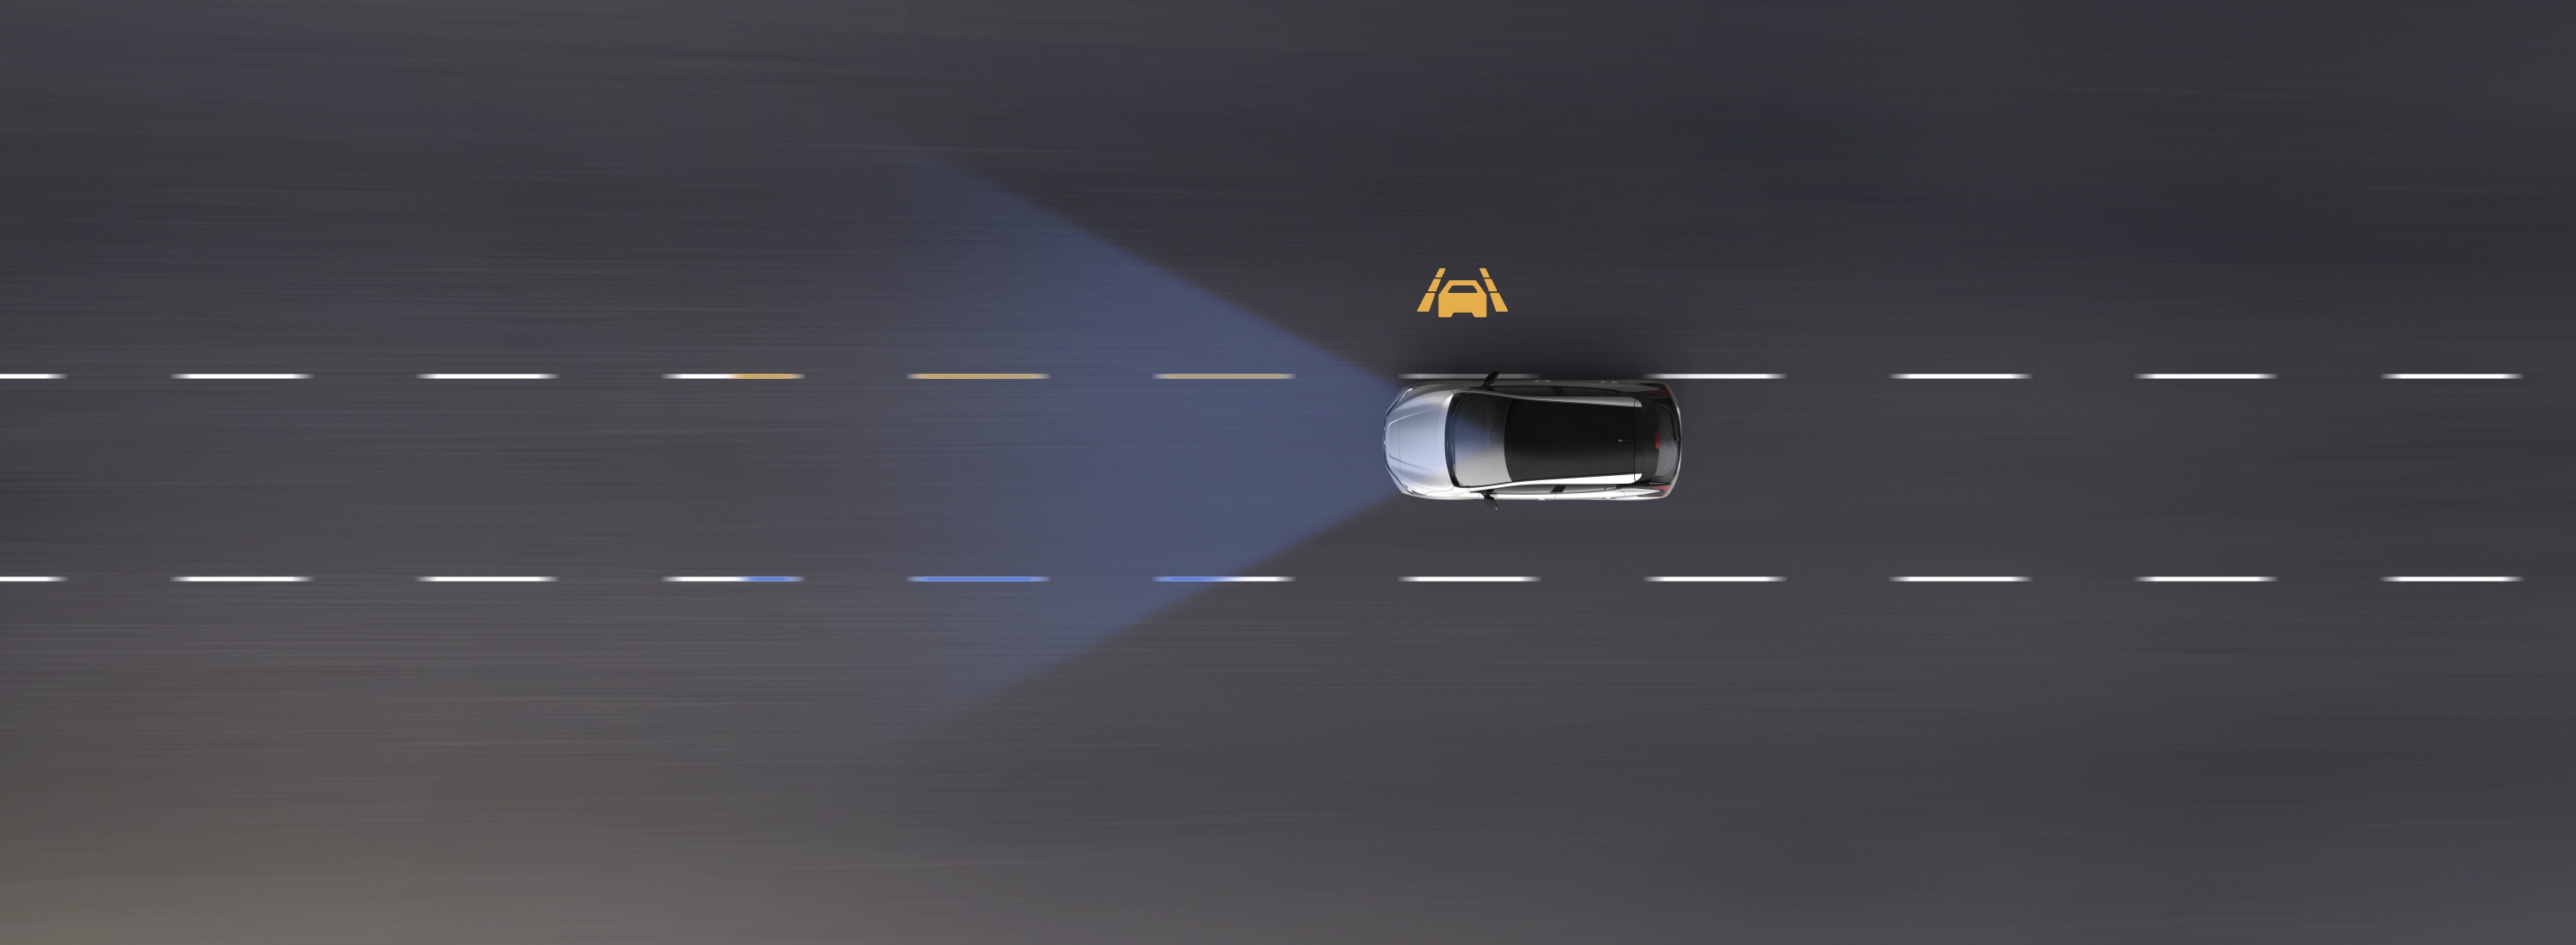 Nissan LEAF Intelligent Lane Intervention animation 